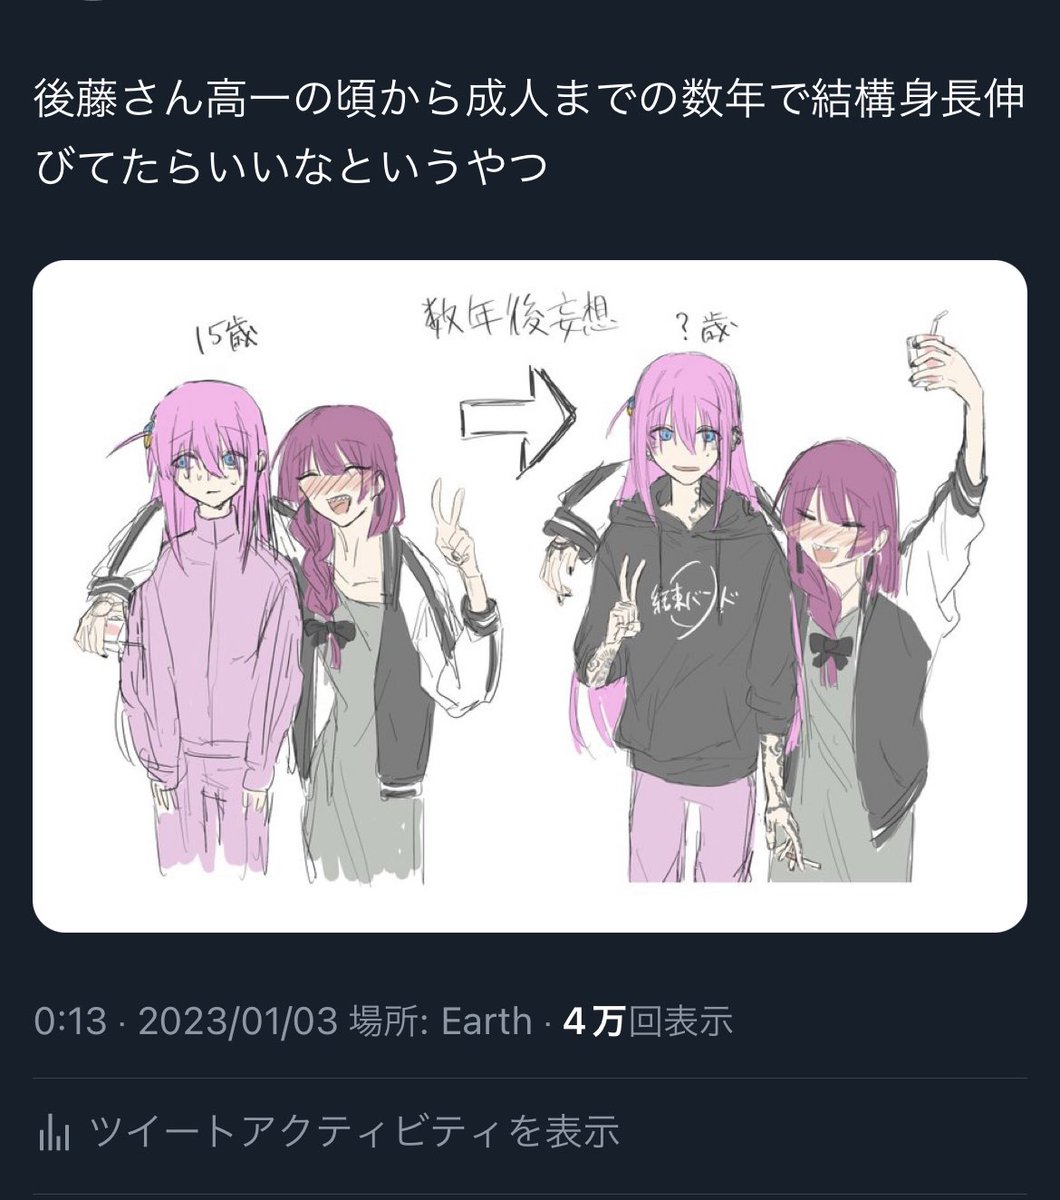 multiple girls 2girls hat pink hair purple eyes long hair pants  illustration images